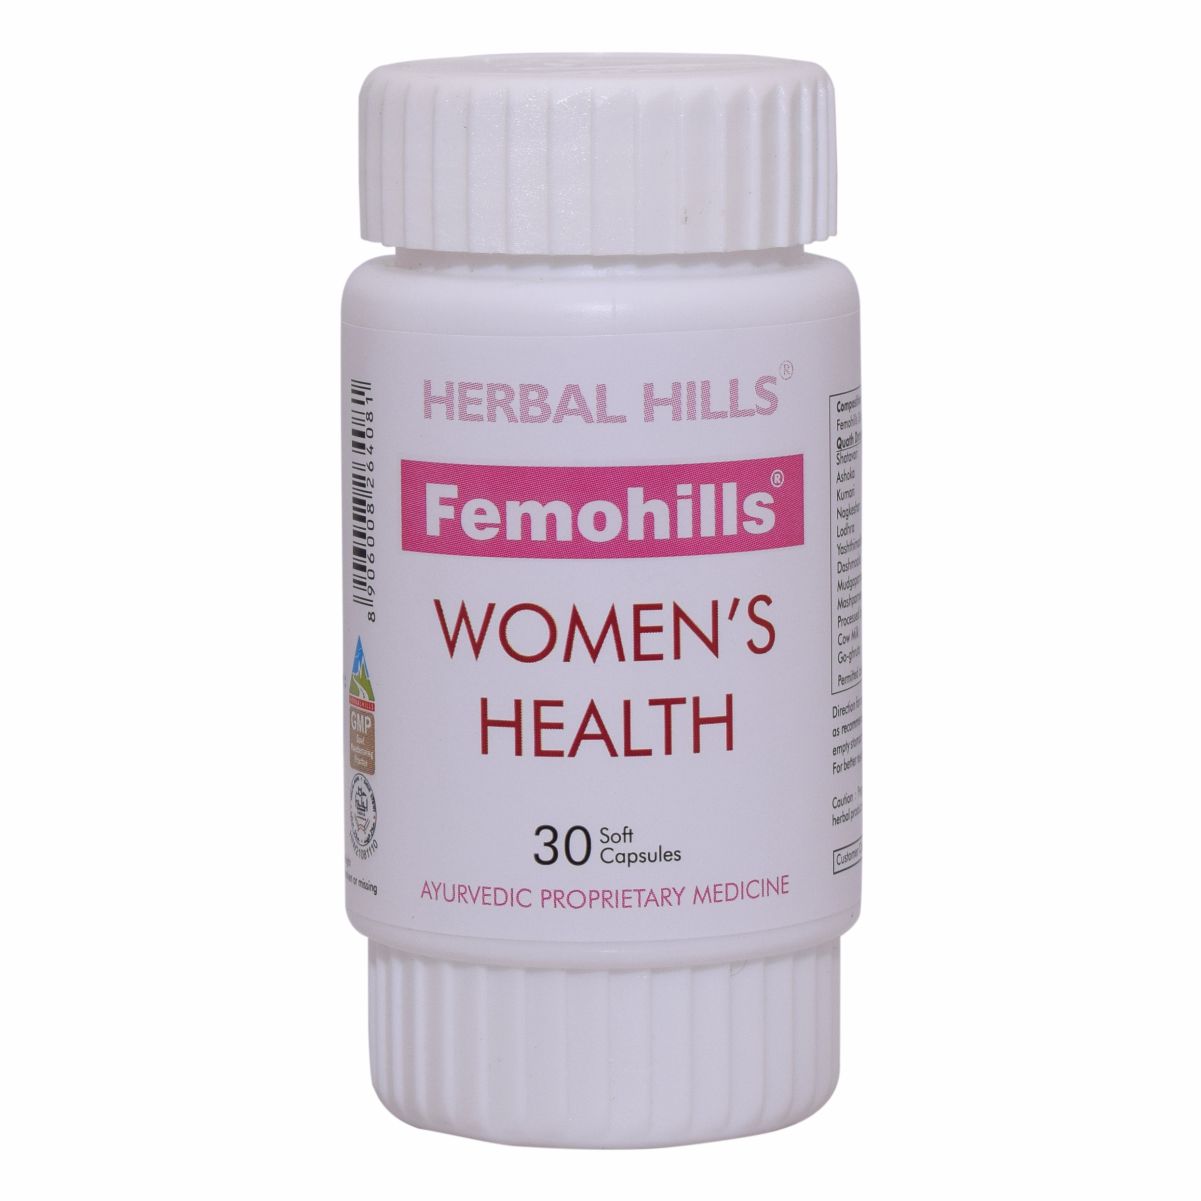 Buy Herbal Hills Femohills at Best Price Online